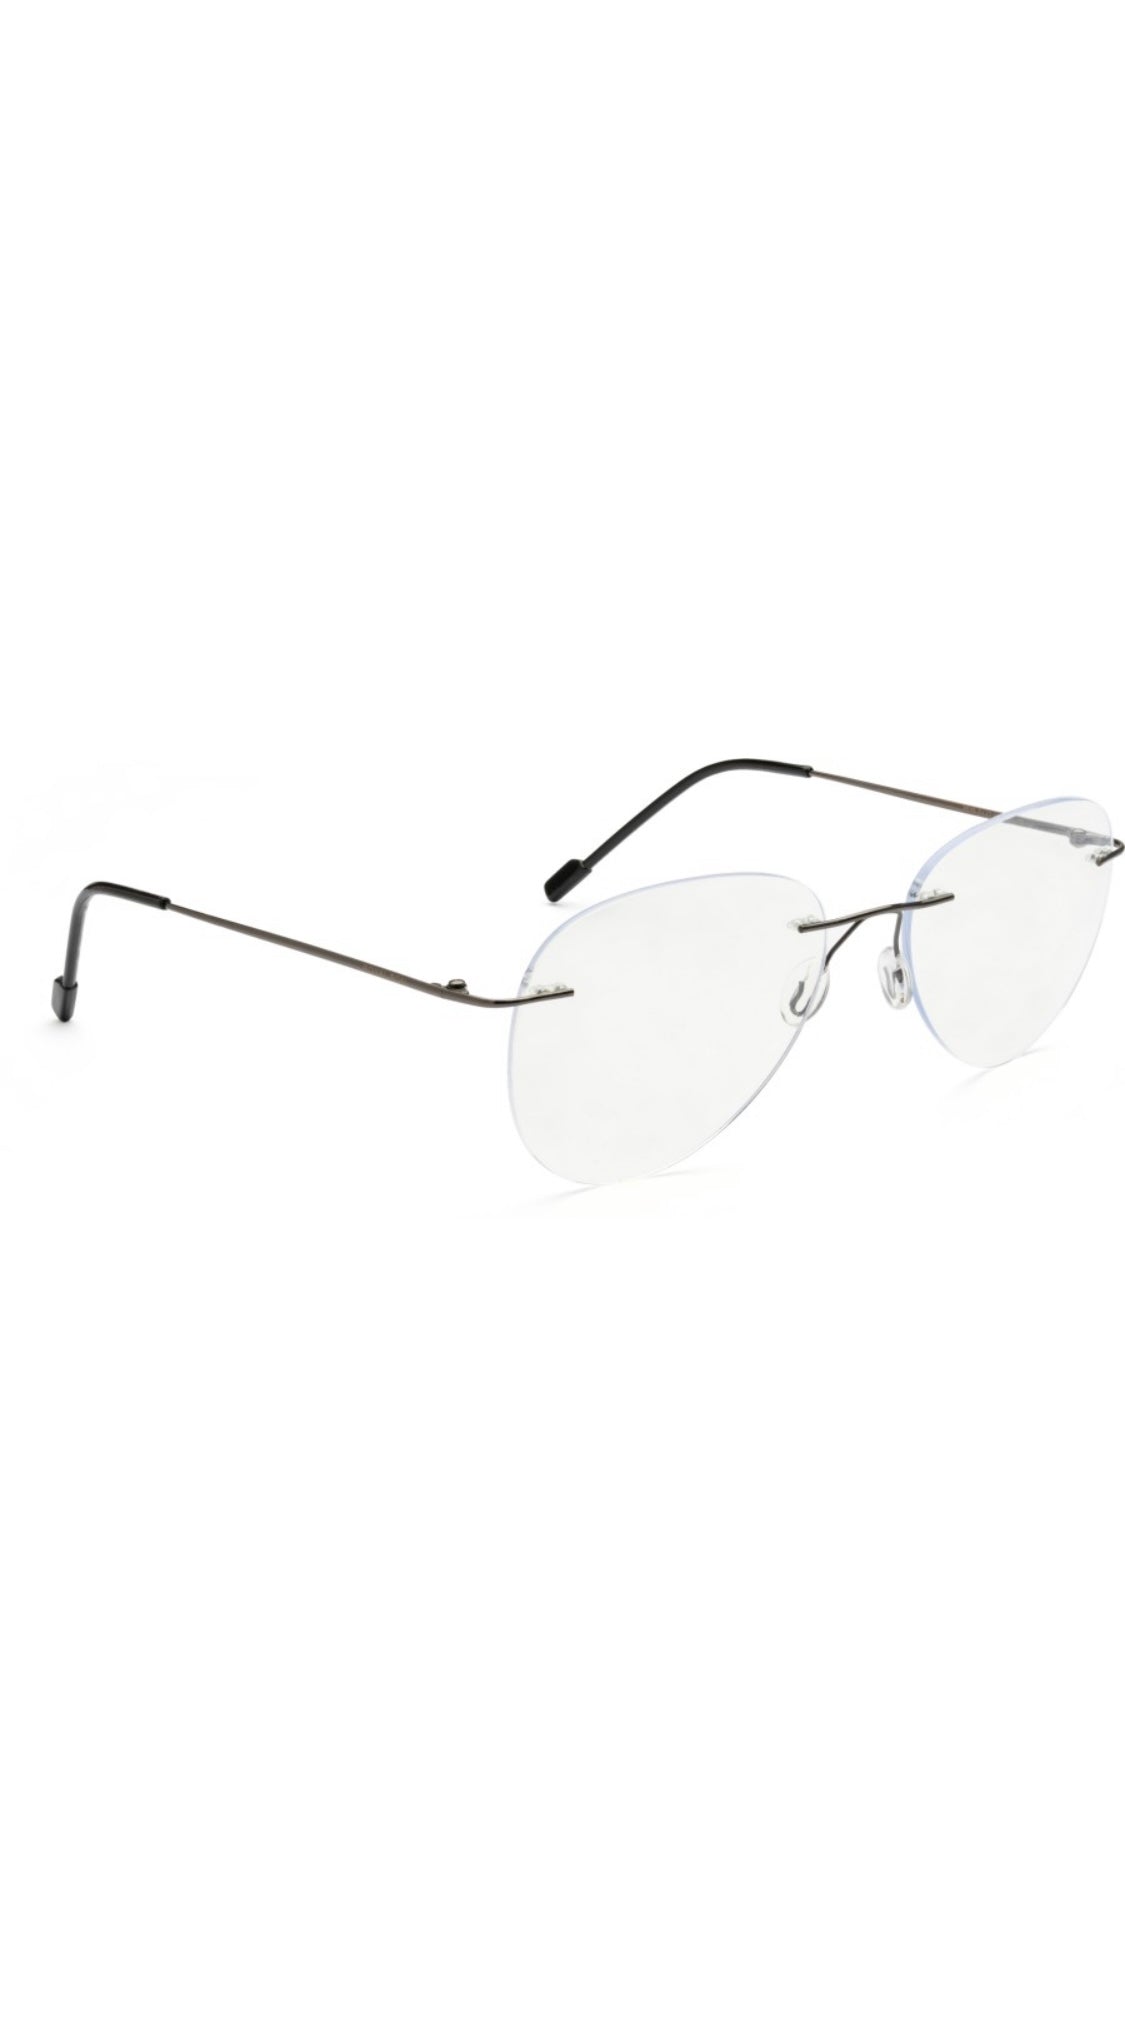 Jodykoes® Rimless Aviator Frame Zero Power Anti Glare Spectacle For Men and Women | Unisex Computer Eyeglasses Light Weight Aviator Frameless Eyewear (Black) - Jodykoes ®